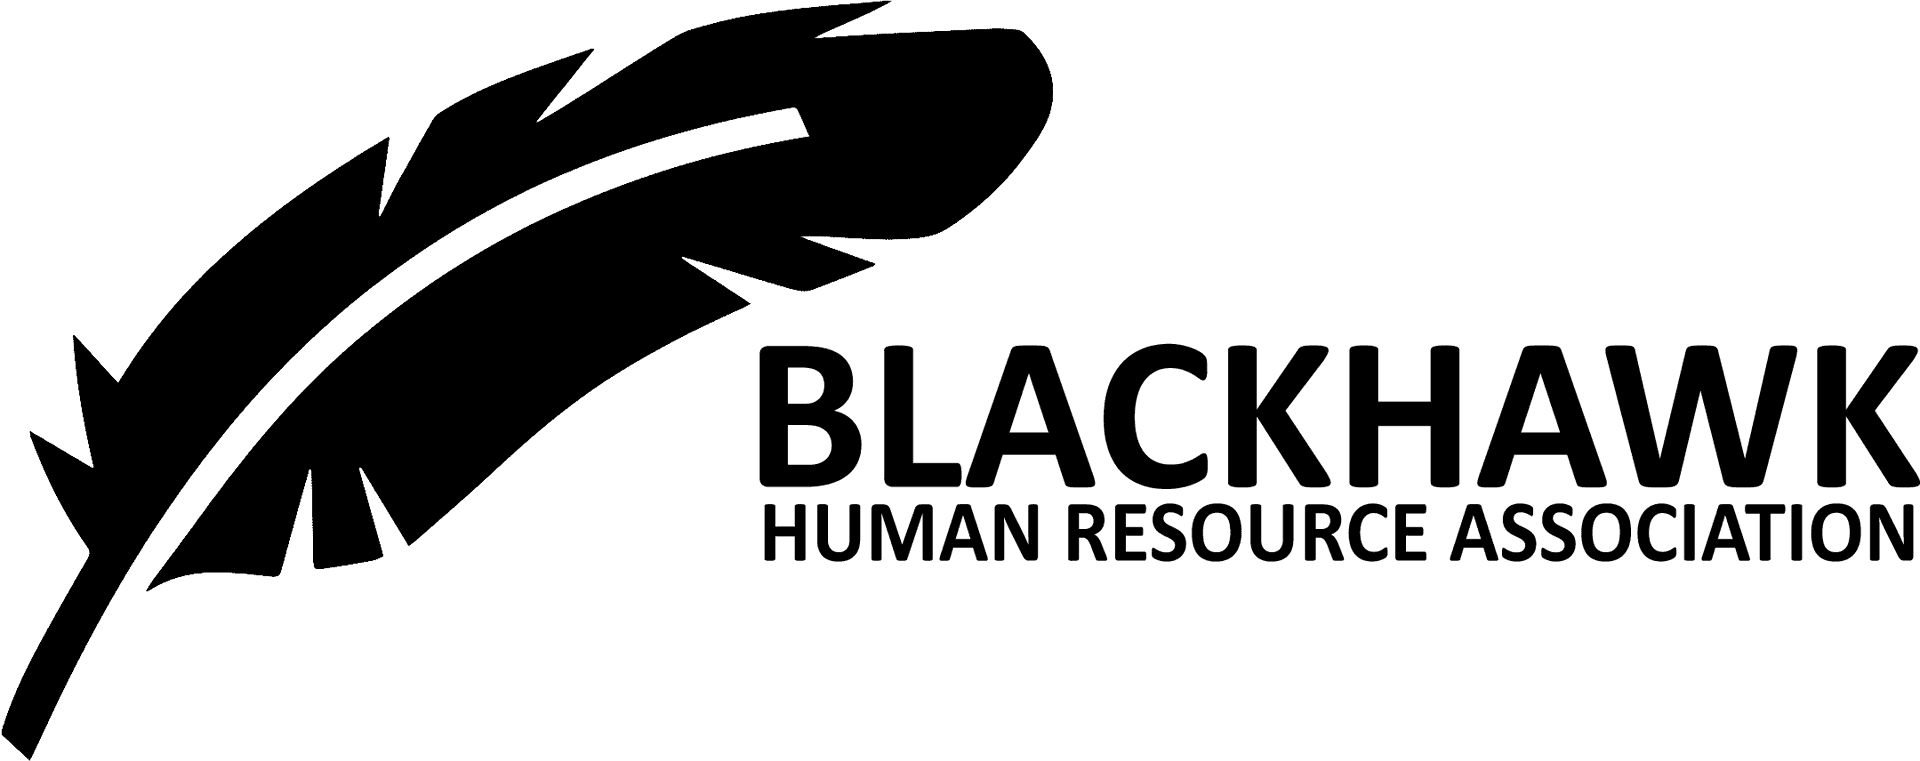 Blackhawk Human Resource Association Logo PNG